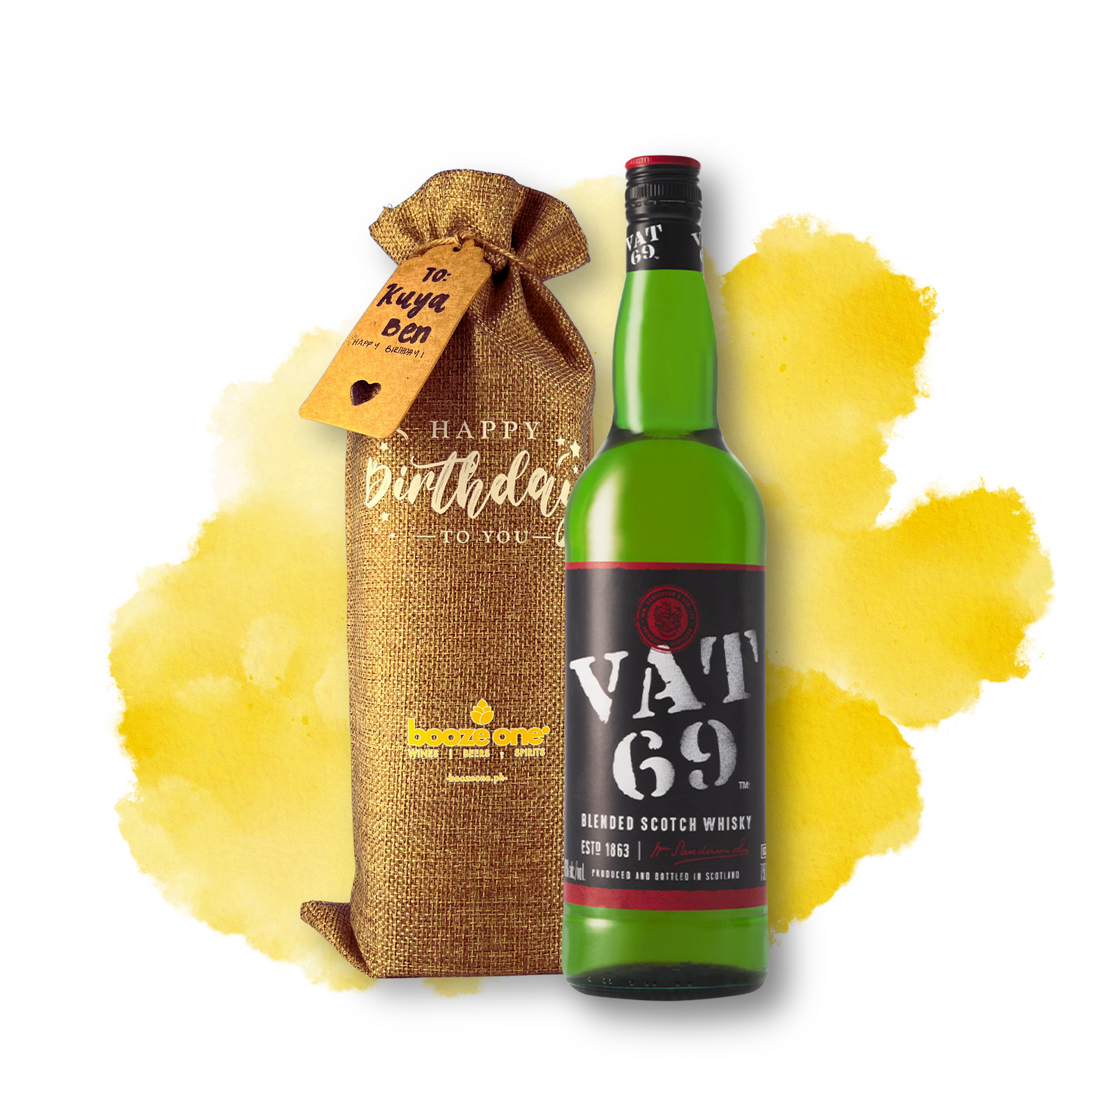 Vat 69 Scotch Whisky, 750mL in Burlap Gift Bag